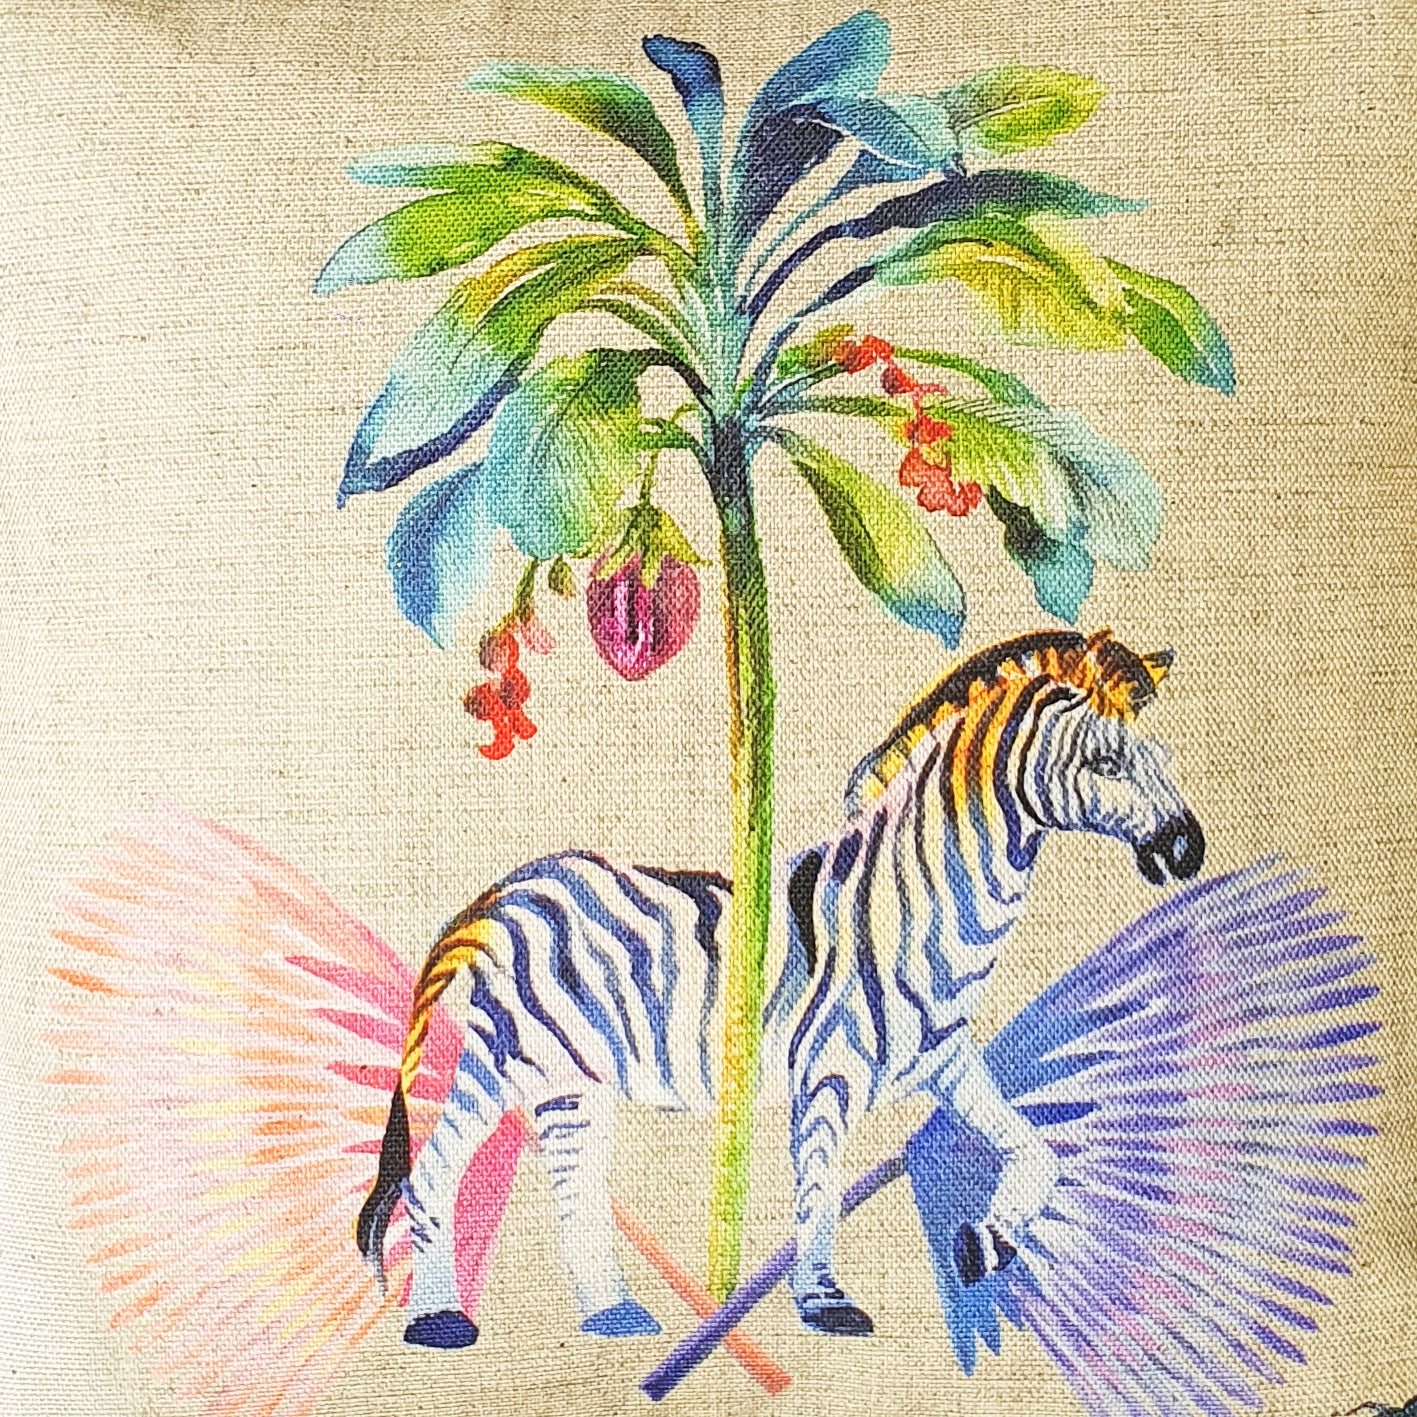 Mini Zebra Cushion Cover, 25cm x 25cm, Cotton-linen blend